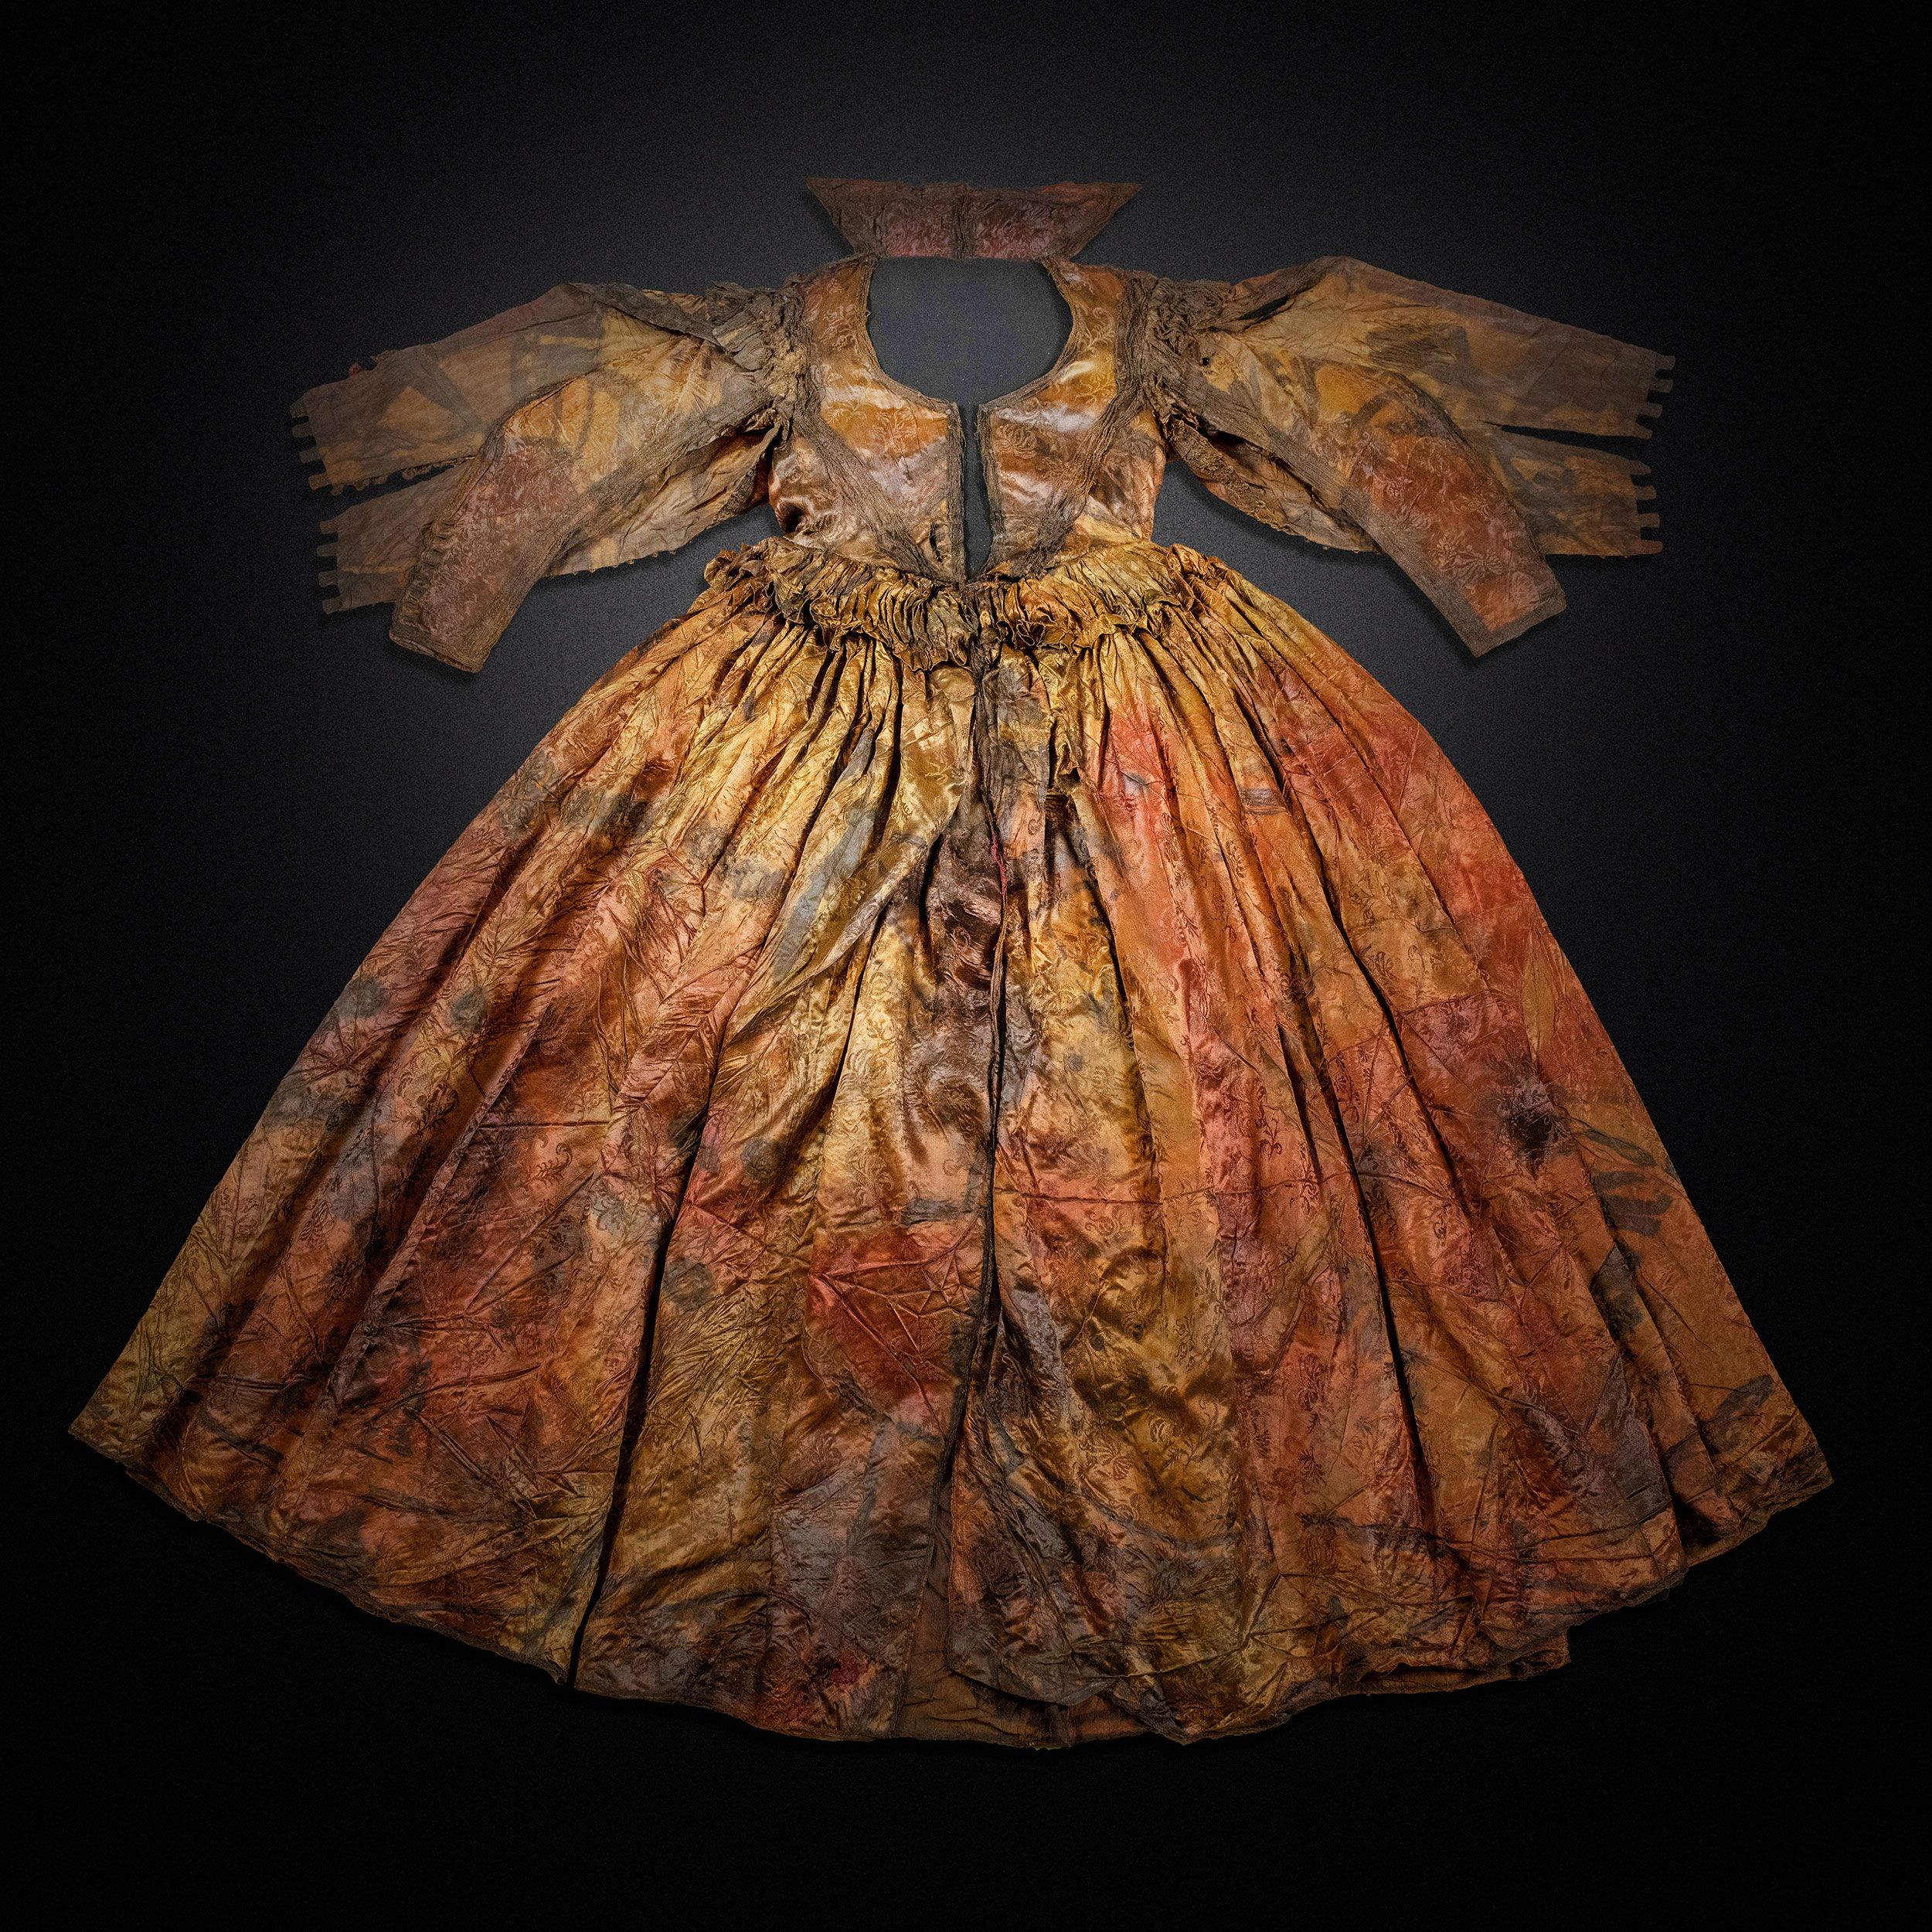 17th century dress costume